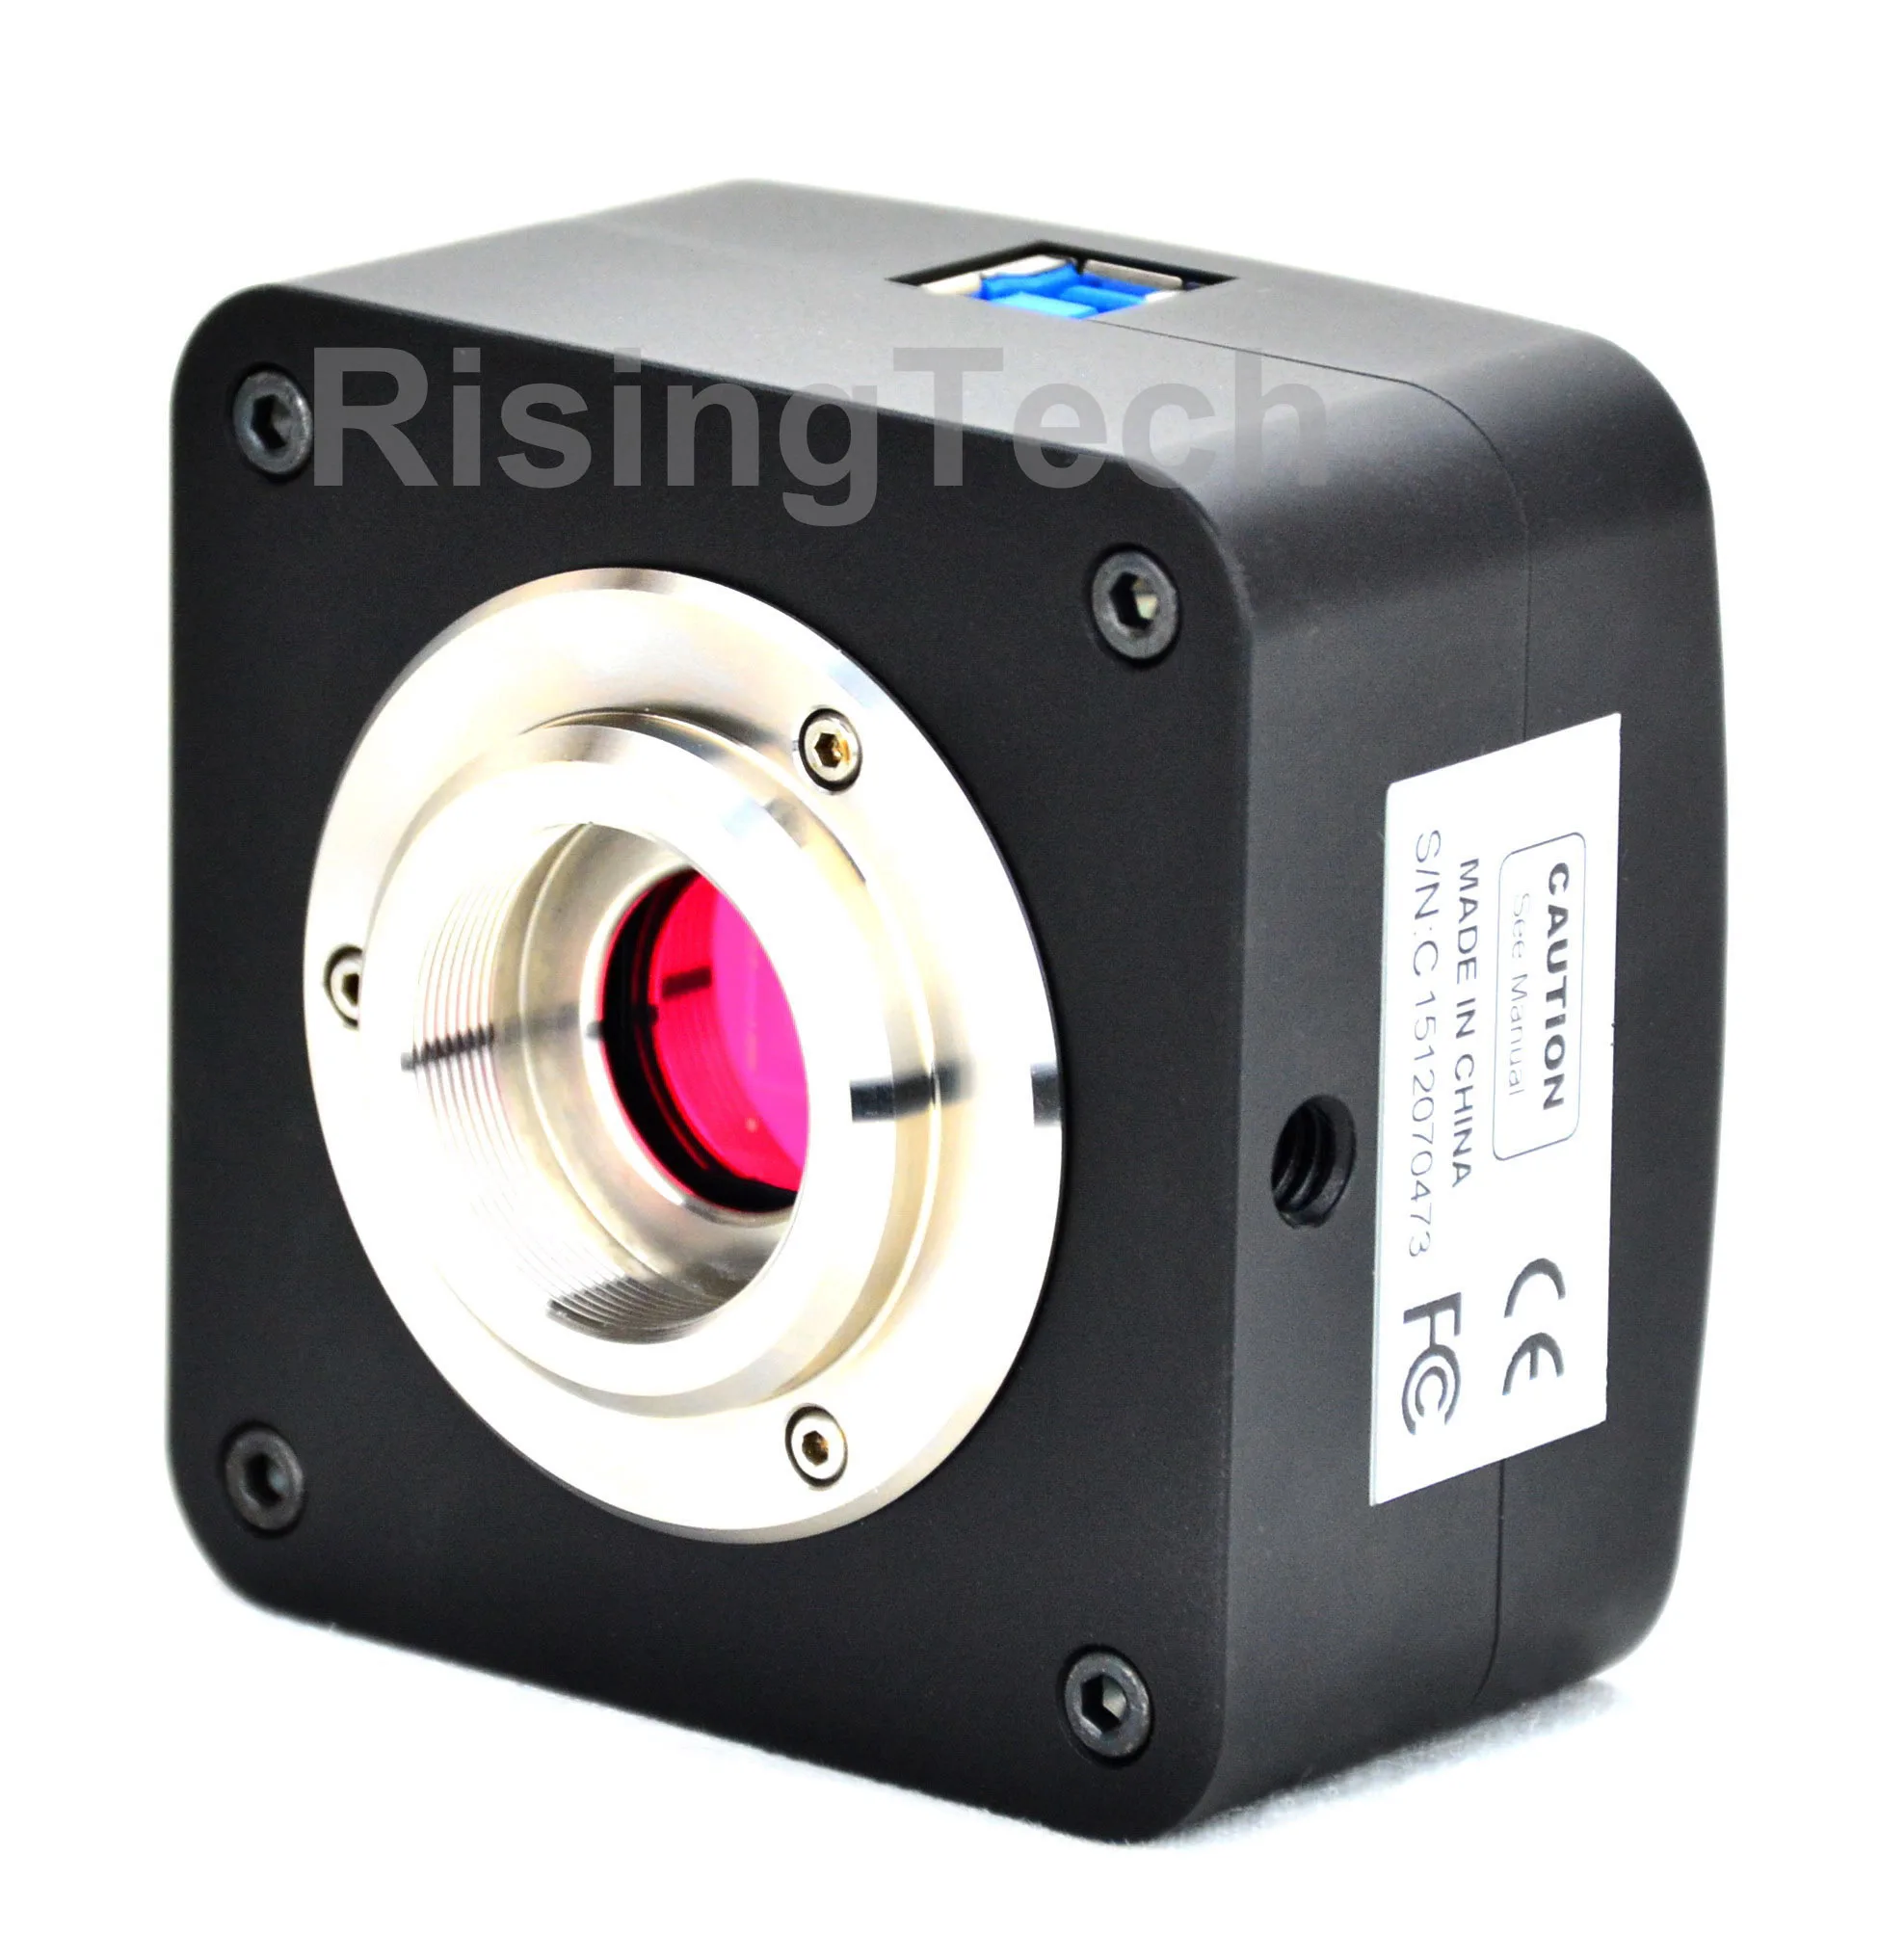 High frame rate 59fps 30fps 6.3 MP SONY imx178 USB3.0 Mikroskop-Kamera for trinokulartubus mikroskop